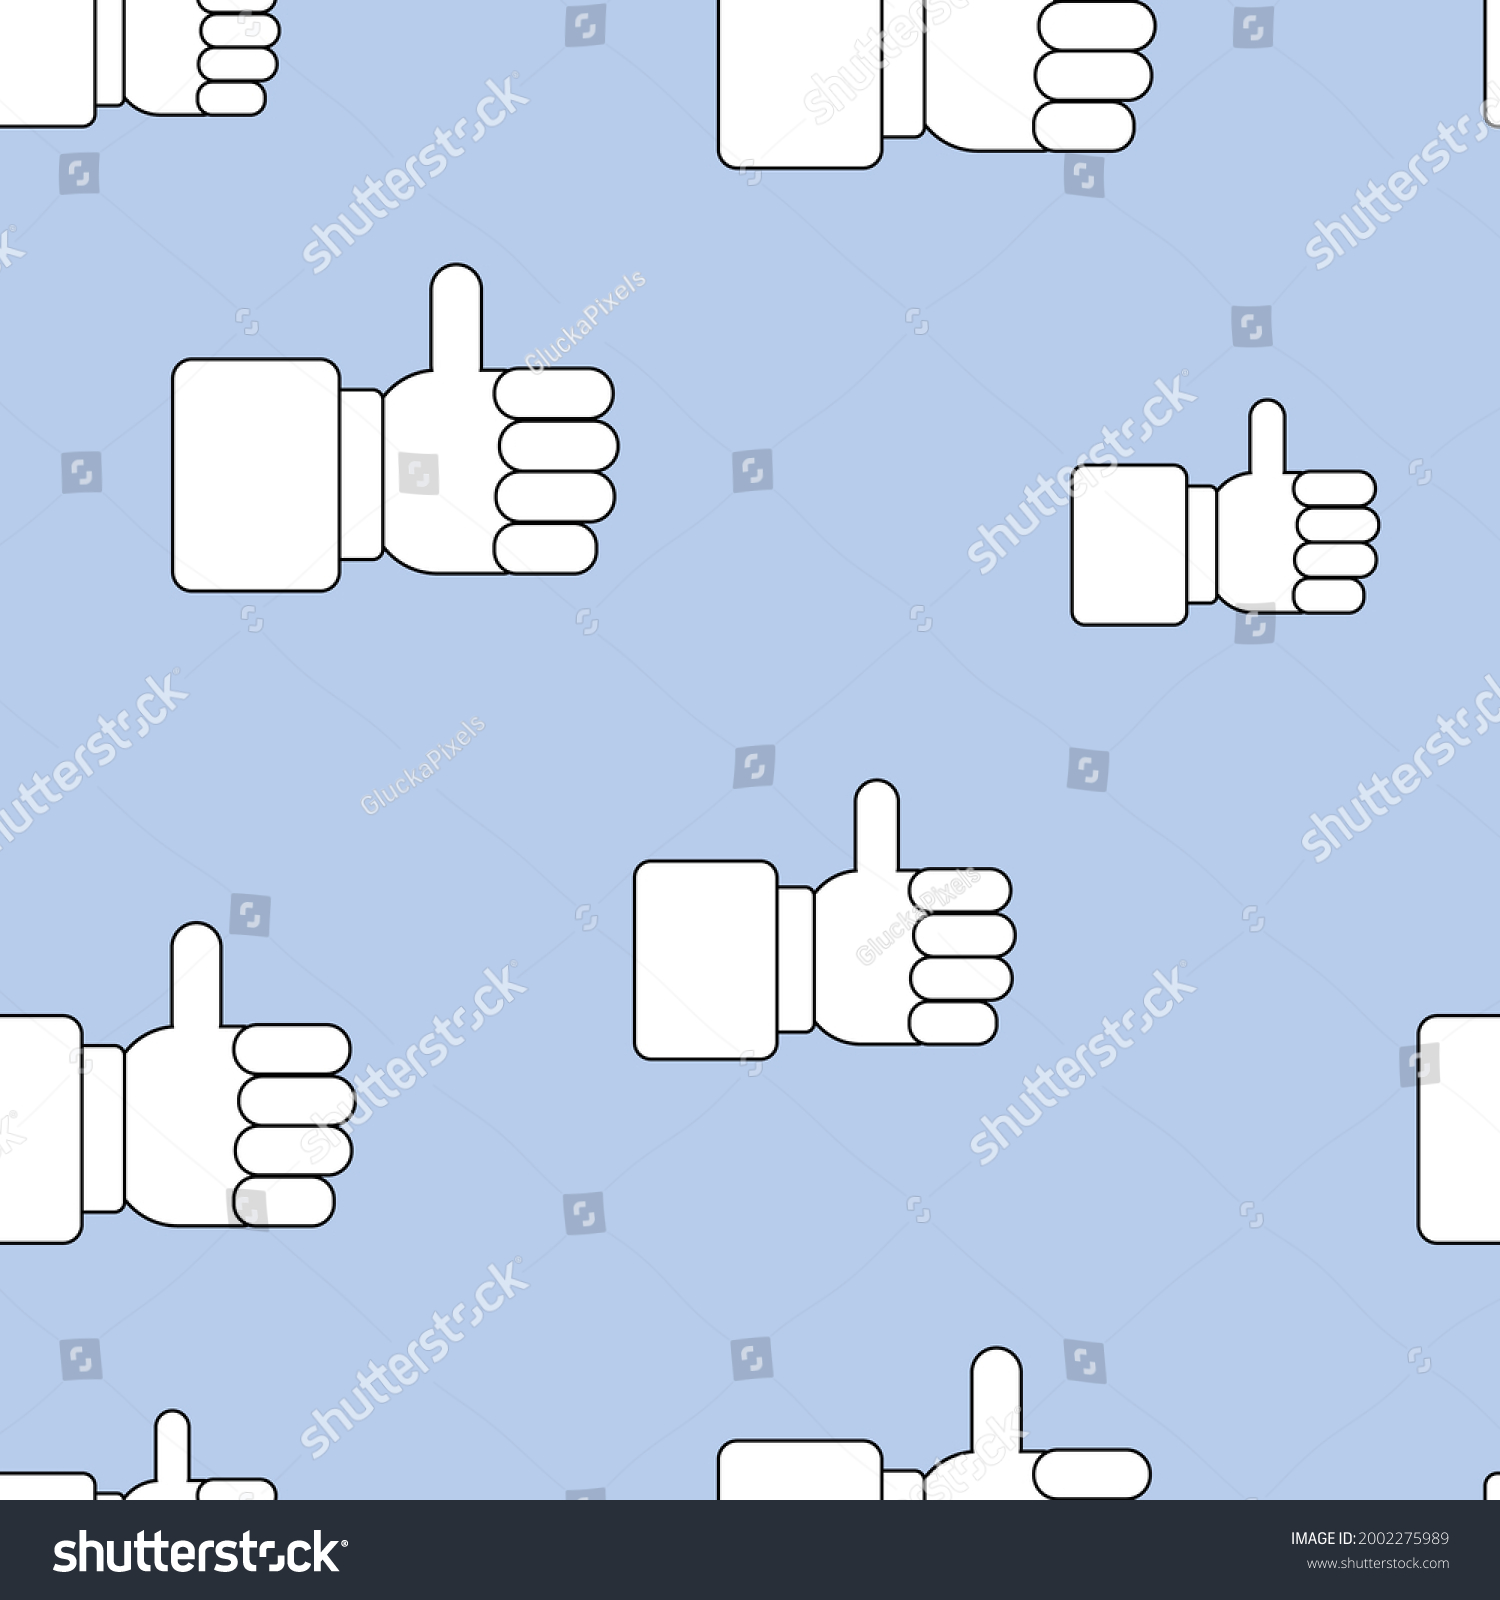 Thumbs Seamless Pattern Line Art Vector Stock Vector Royalty Free Shutterstock